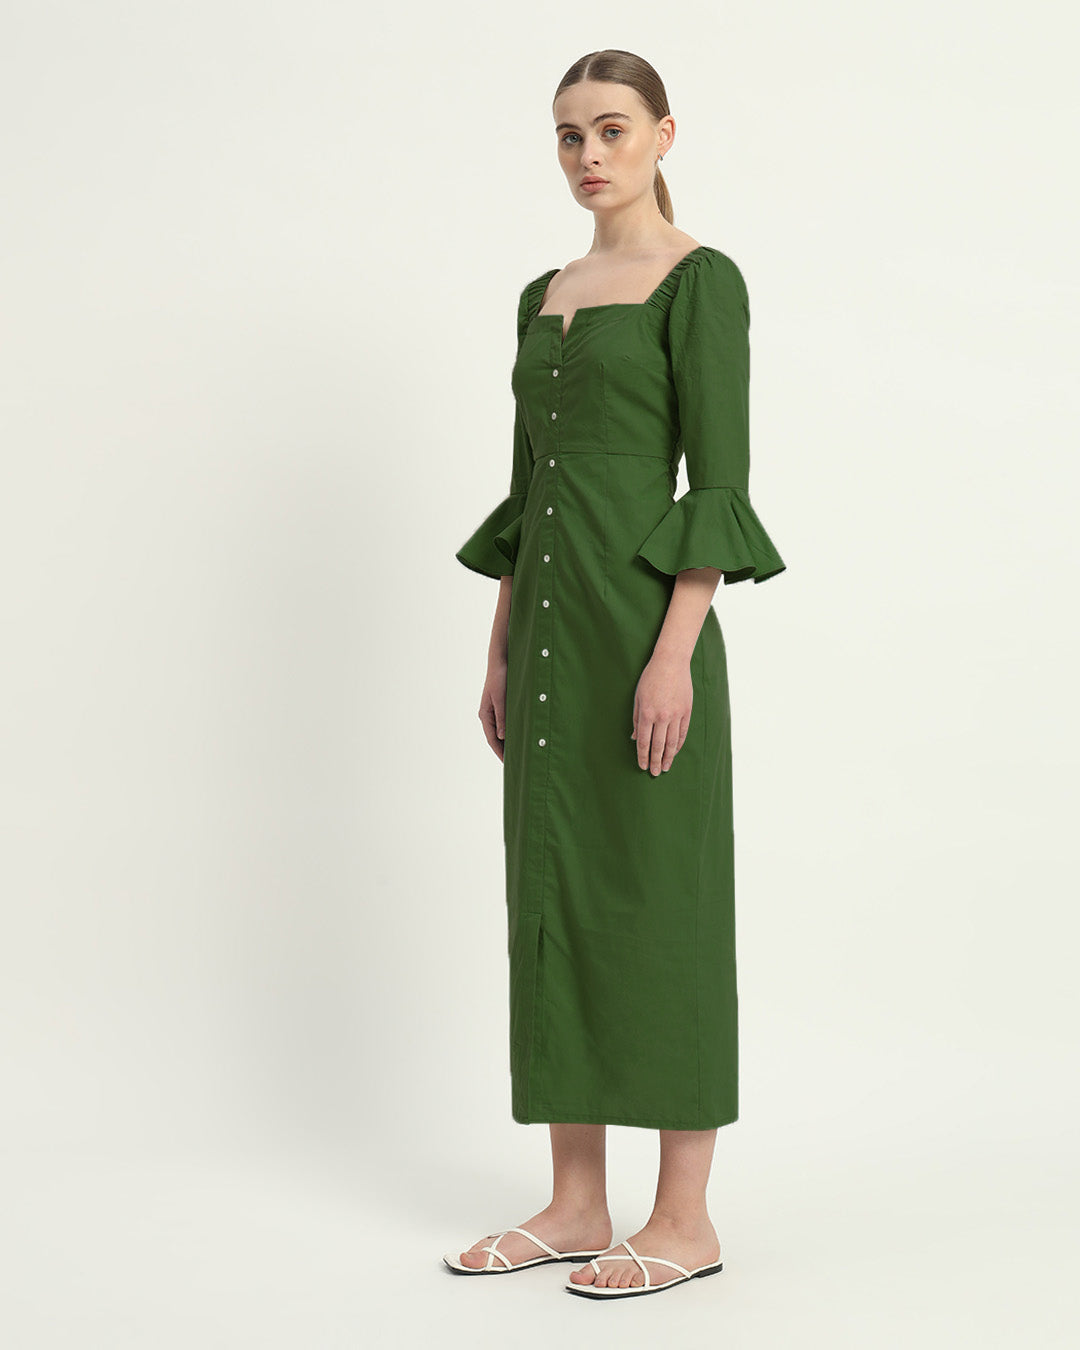 The Emerald Rosendale Cotton Dress